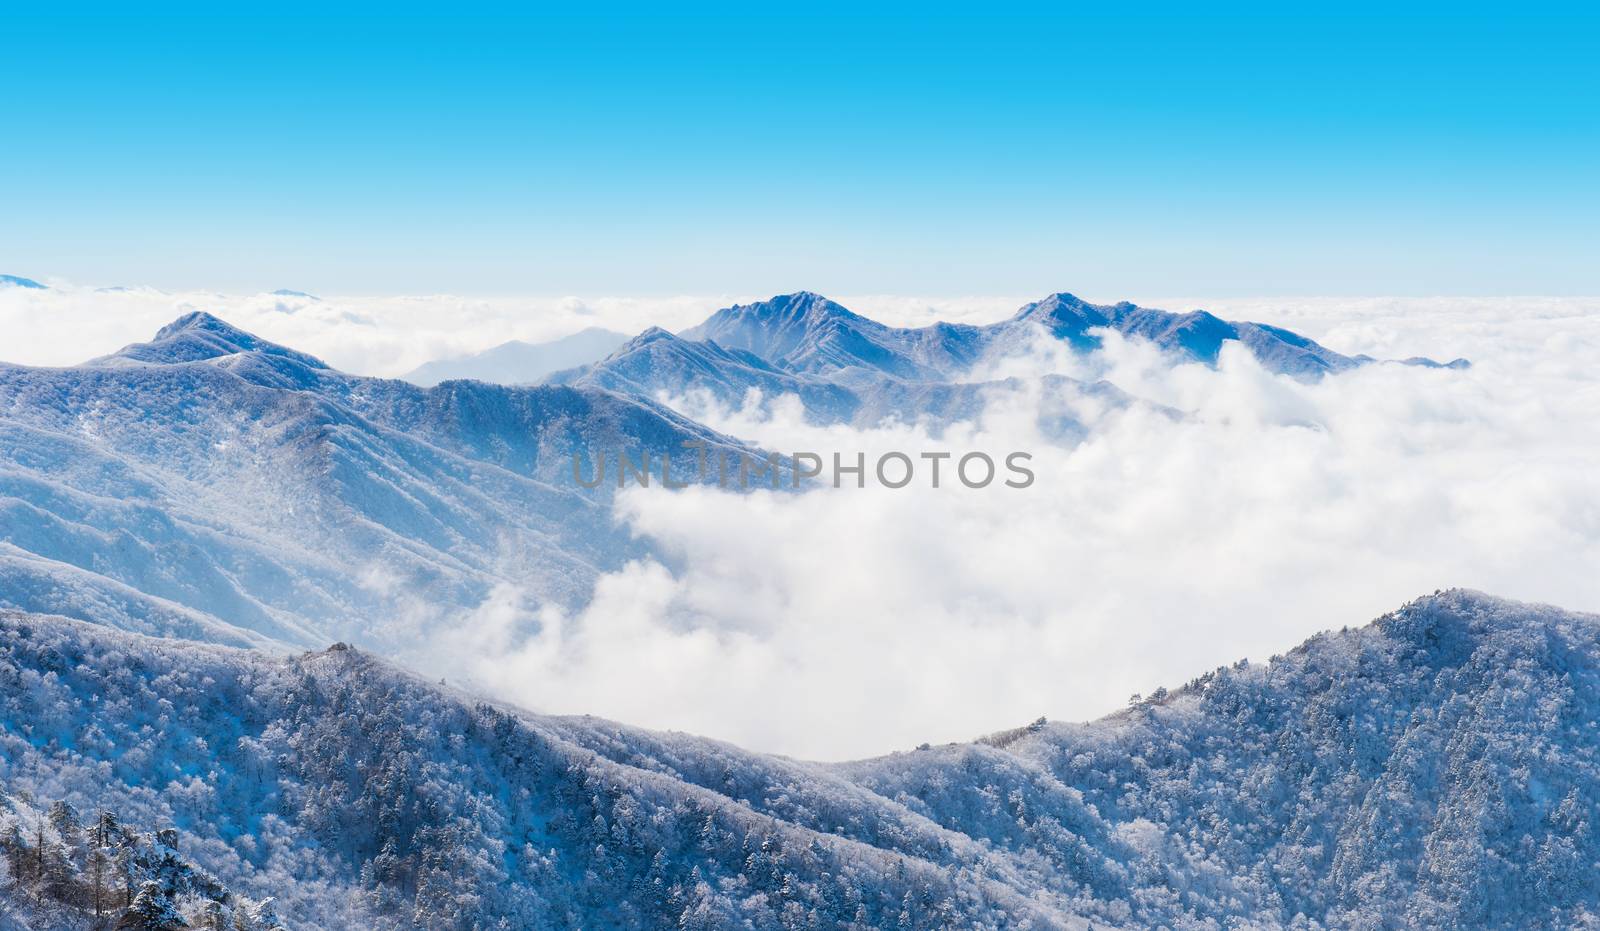 Landscape in winter,Deogyusan in korea by gutarphotoghaphy